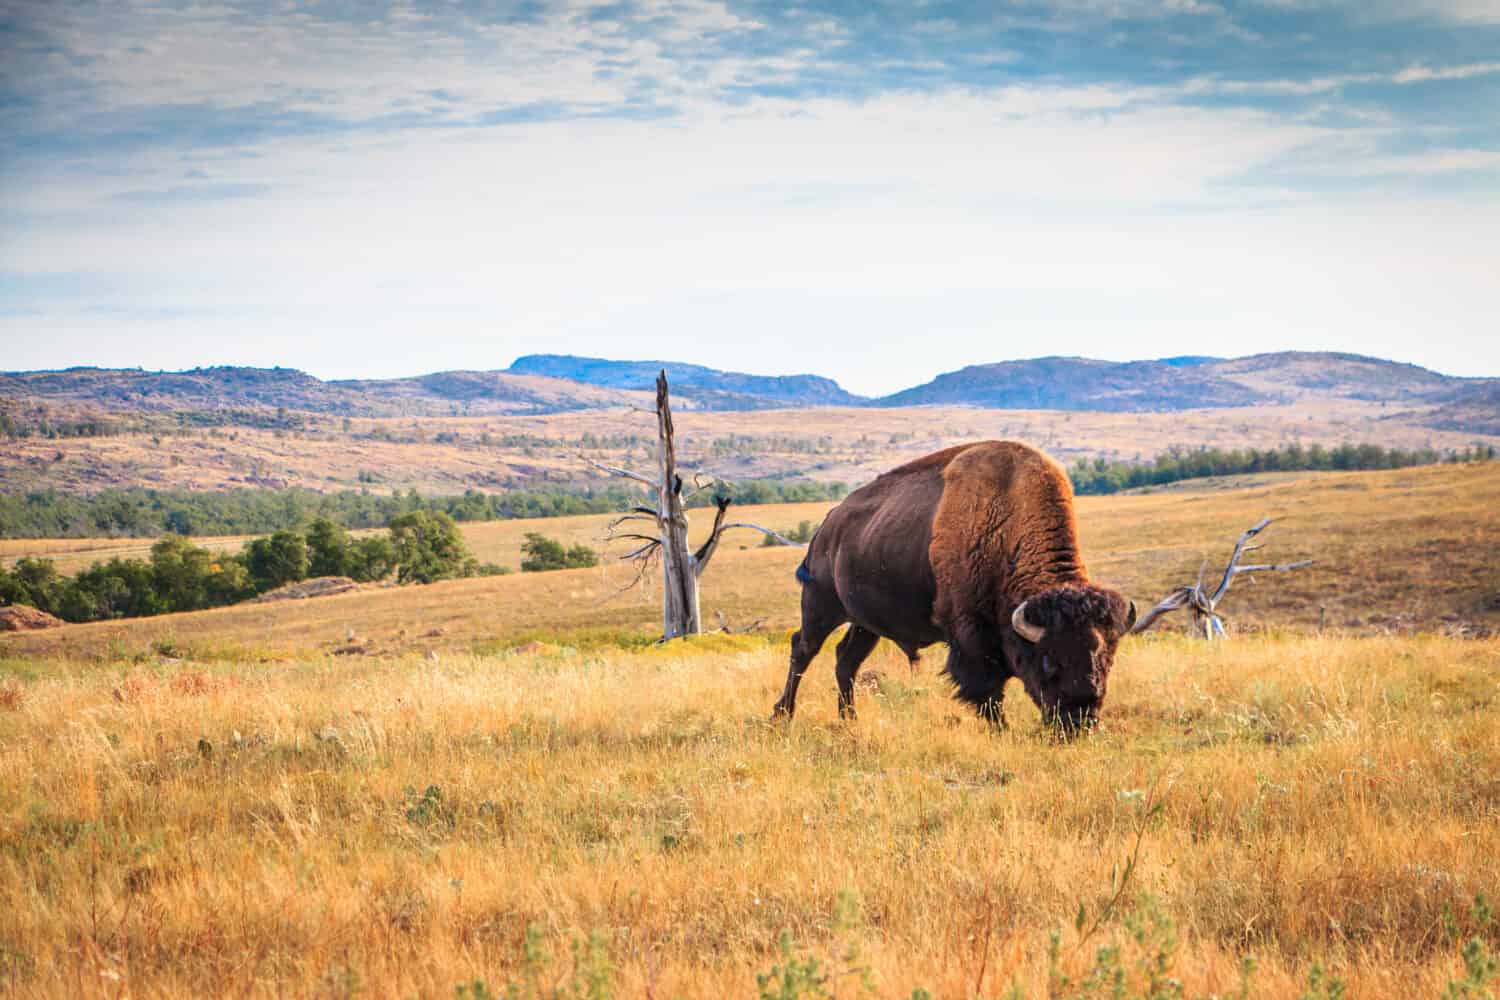 Bison buffalo grazing in the Wichita Mountains, Oklahoma